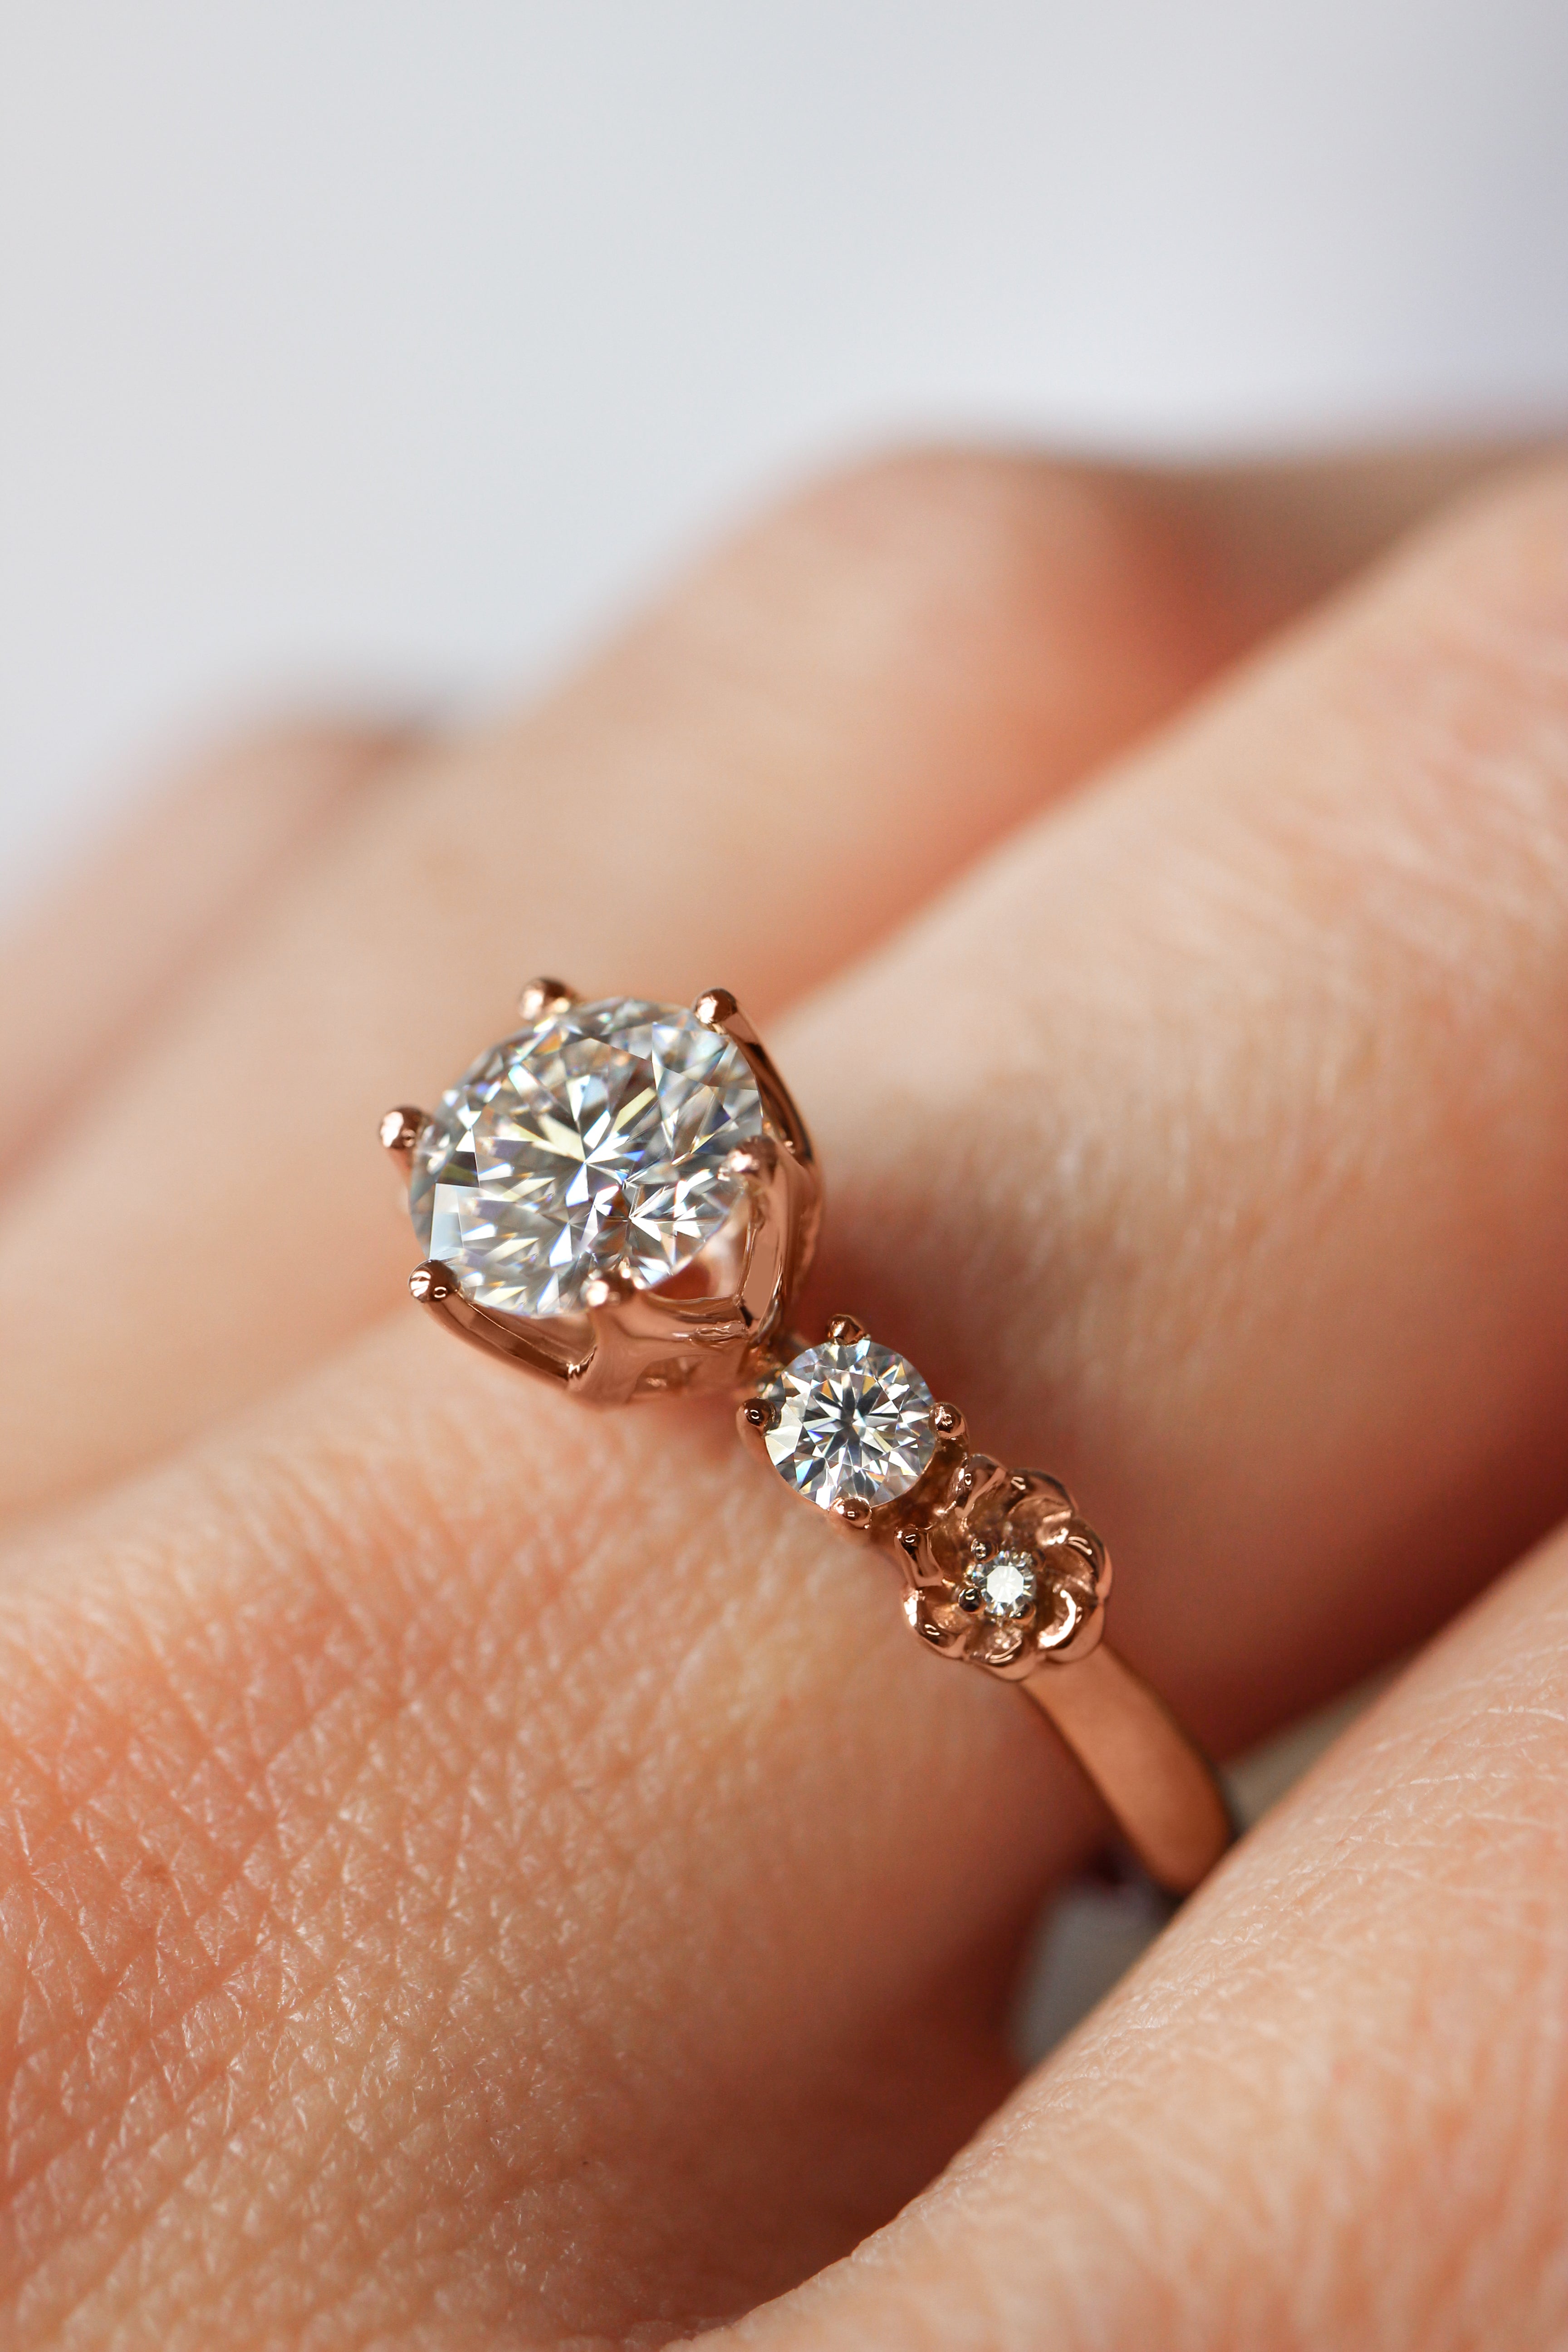 Princess cut diamond simulant ring set in sterling silver